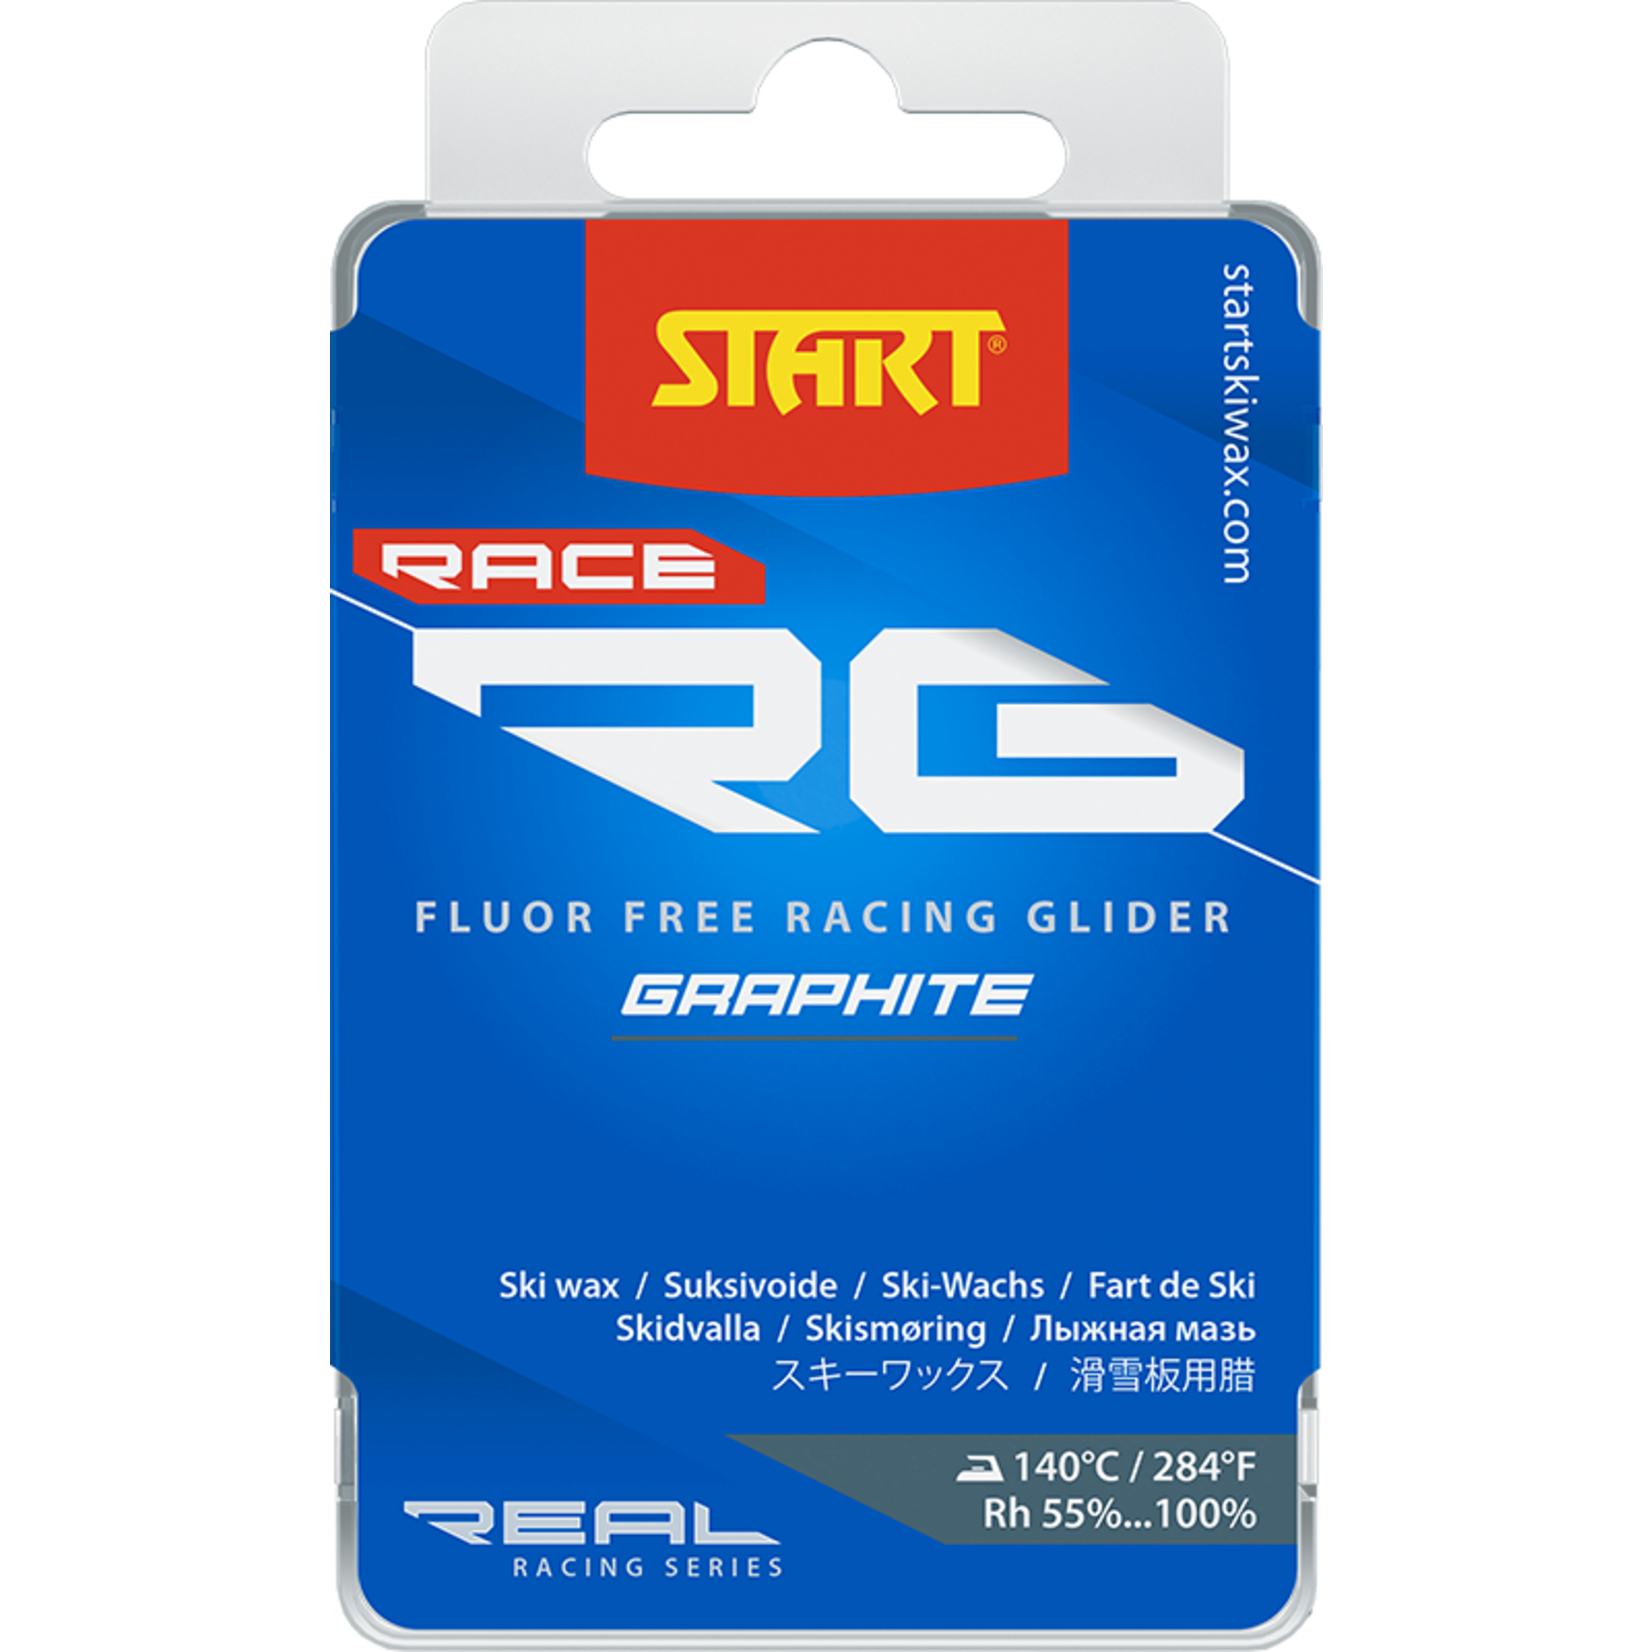 Start Fart de glisse RG Race graphite 60 g